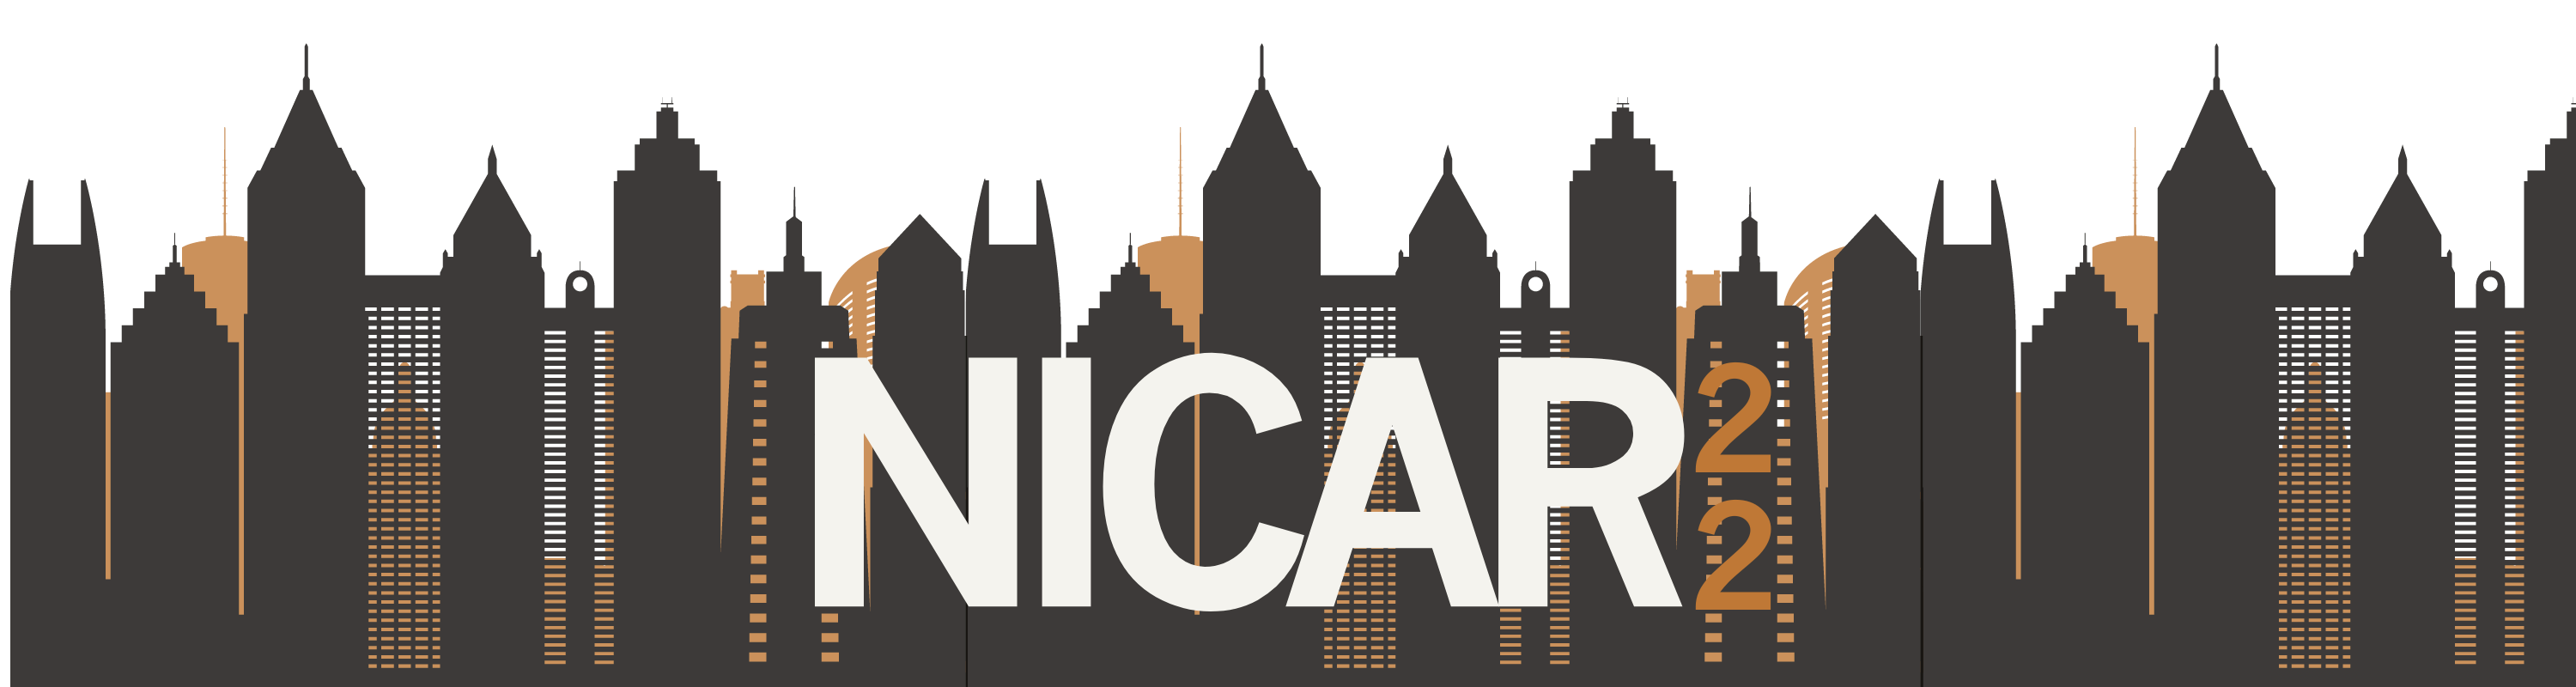 NICAR22 conference logo